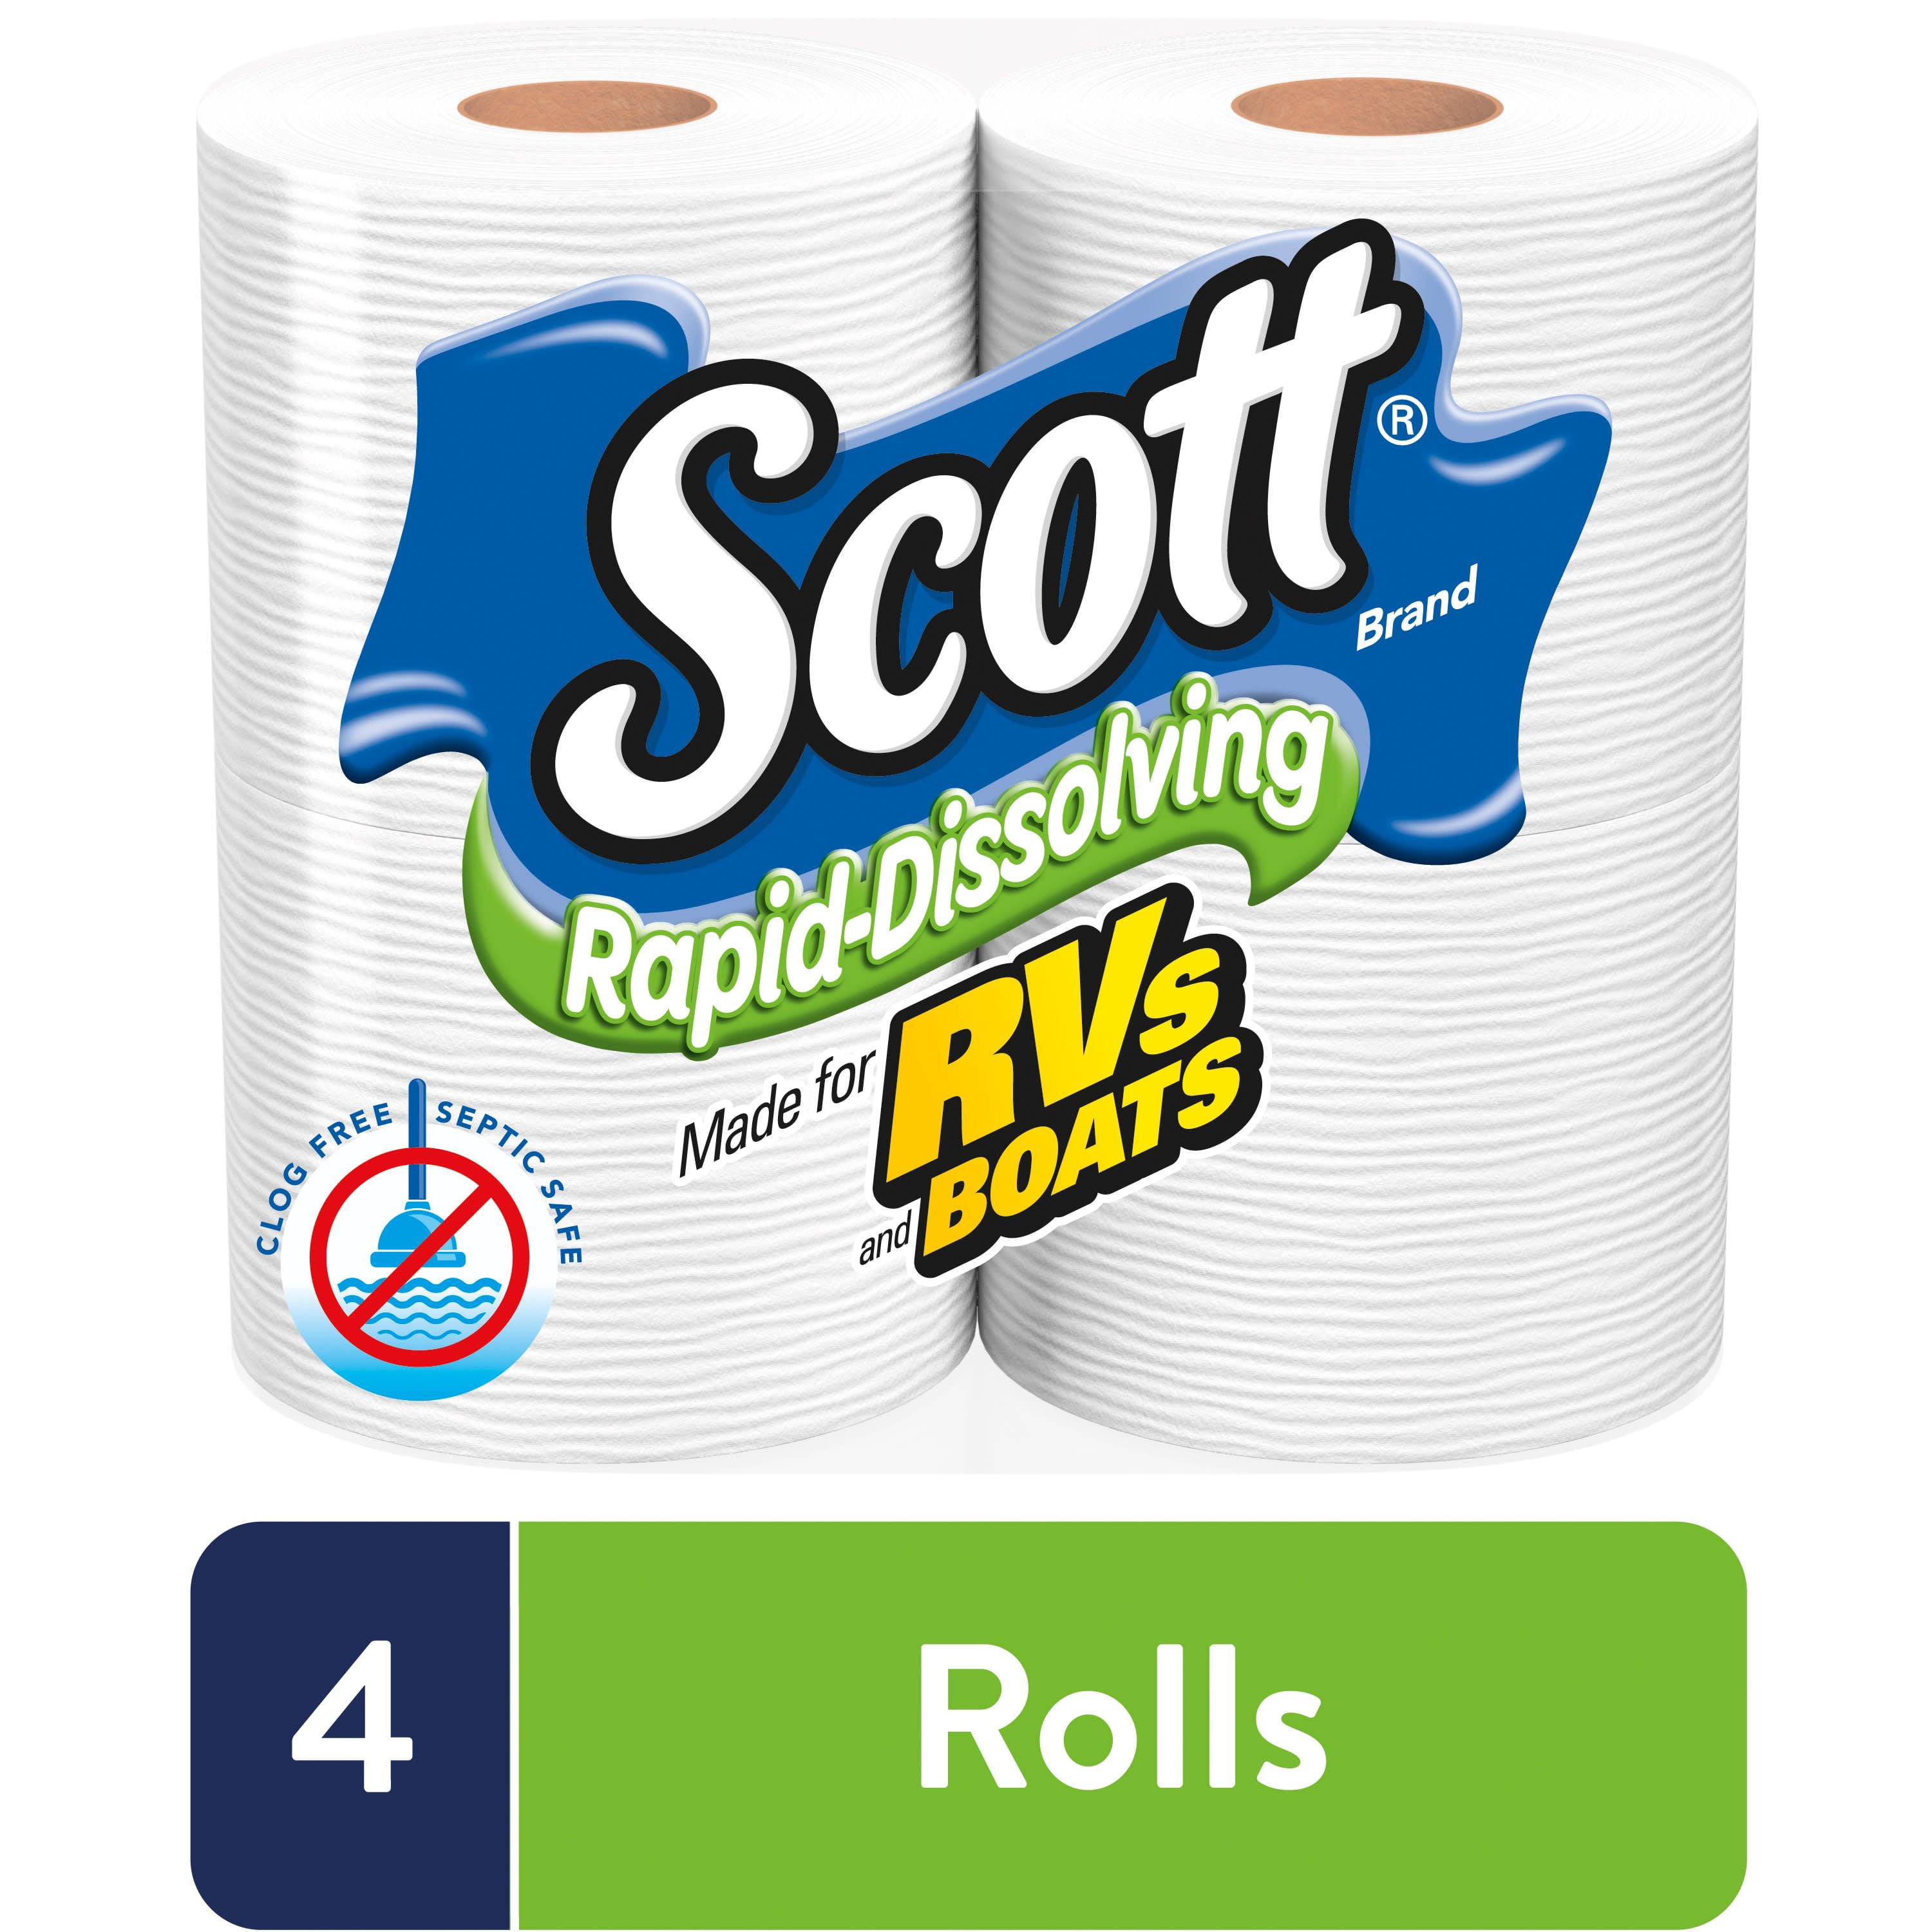 Scott Rapid-Dissolving Toilet Paper 8-Toilet Paper Rolls Bath Tissue RV Boats US 